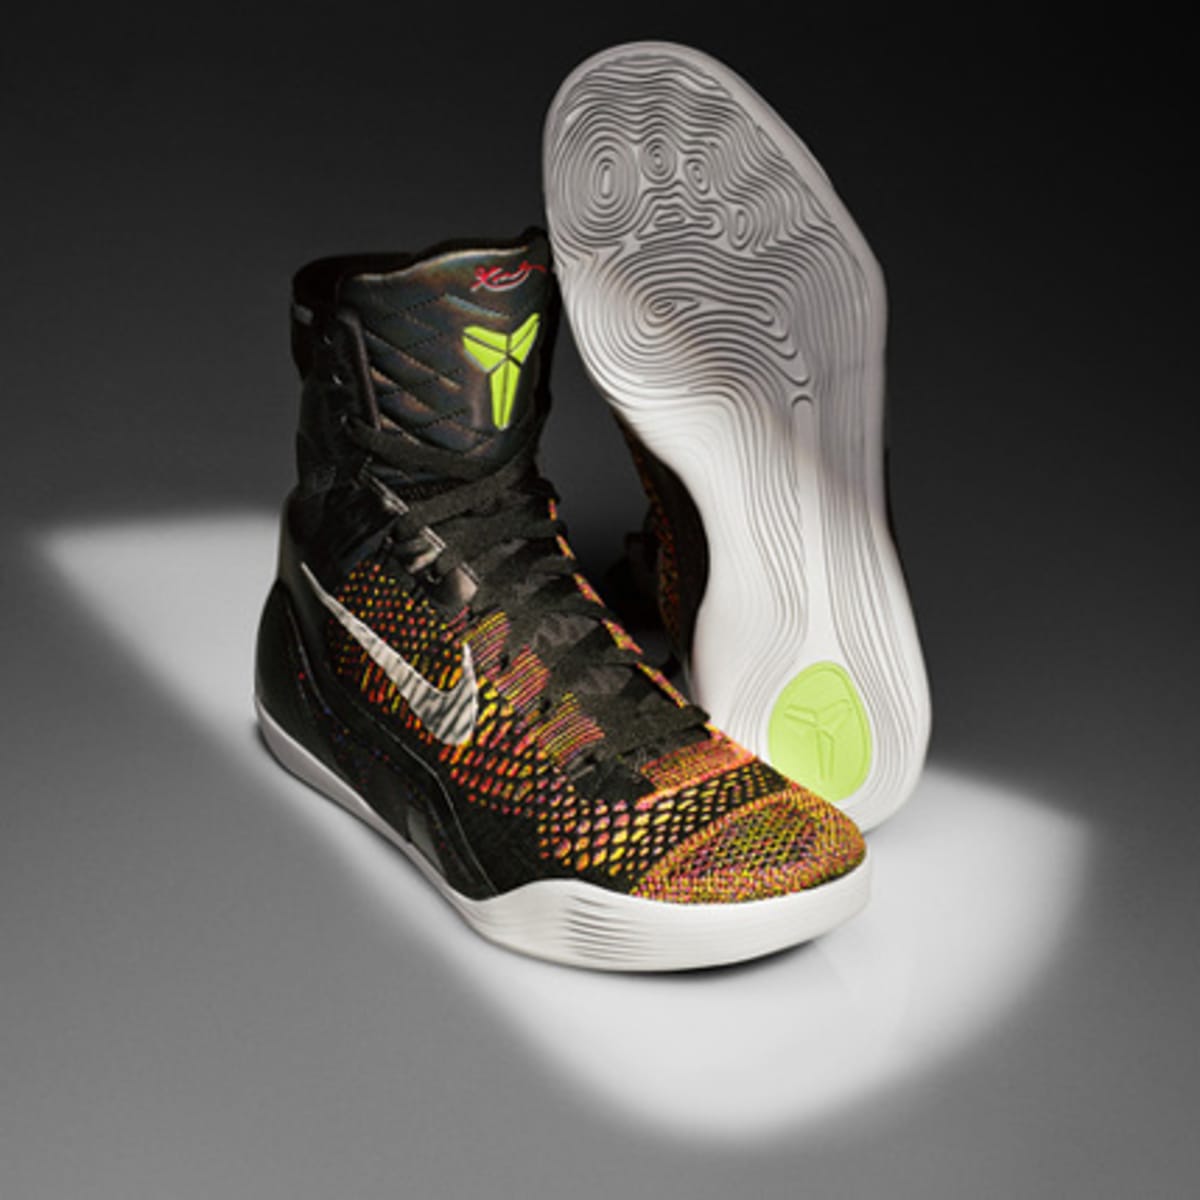 Nike unveils Kobe Bryant's latest 